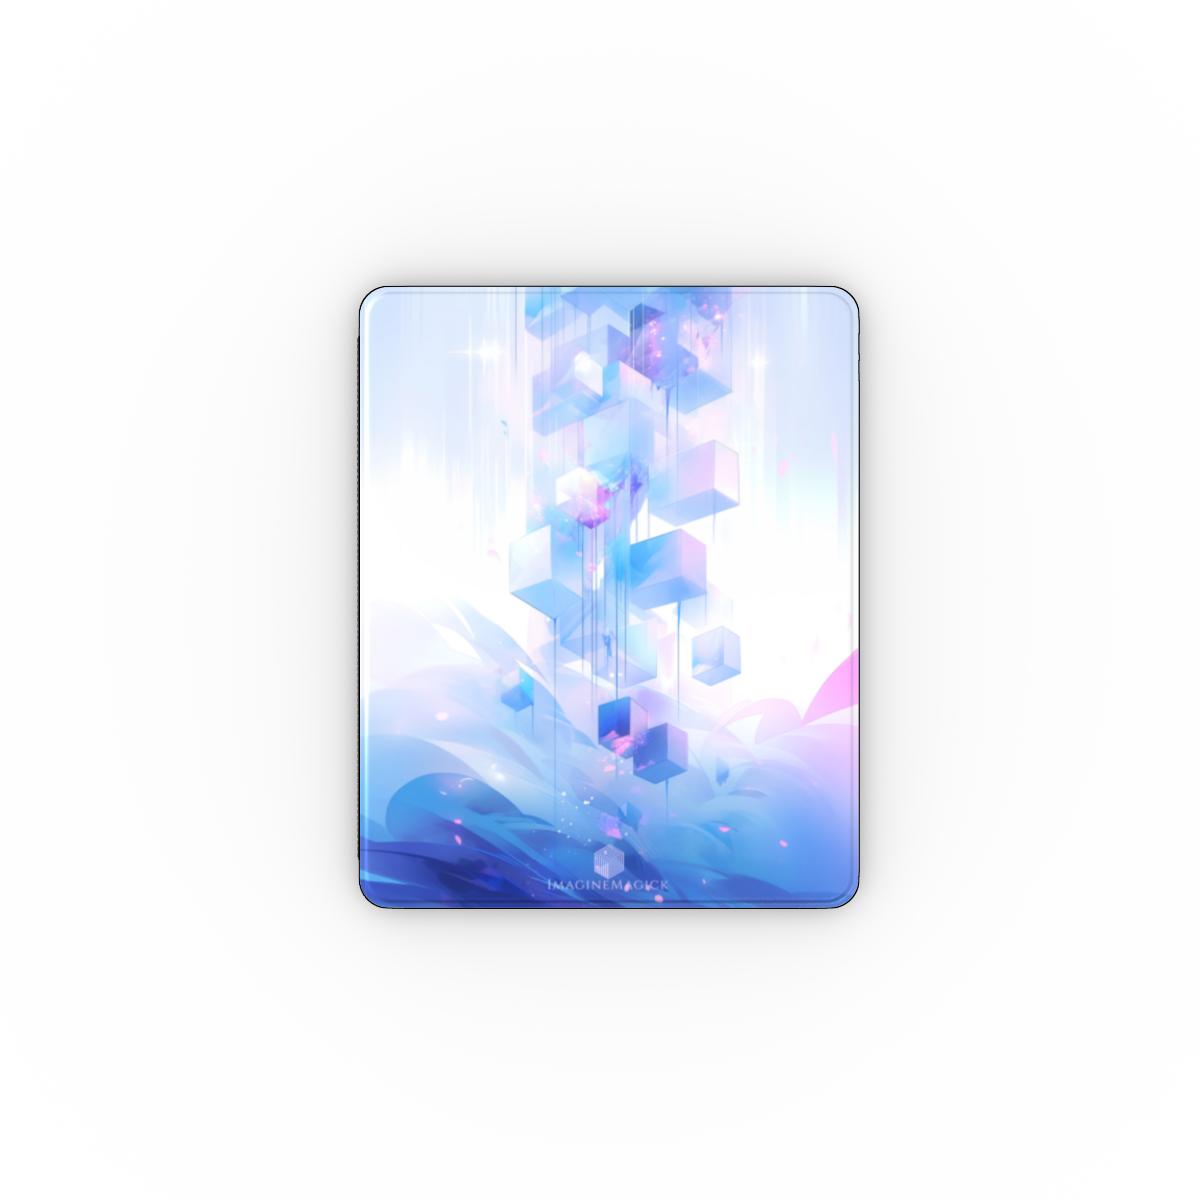 iPad Enchantment - Illusion of dimensions